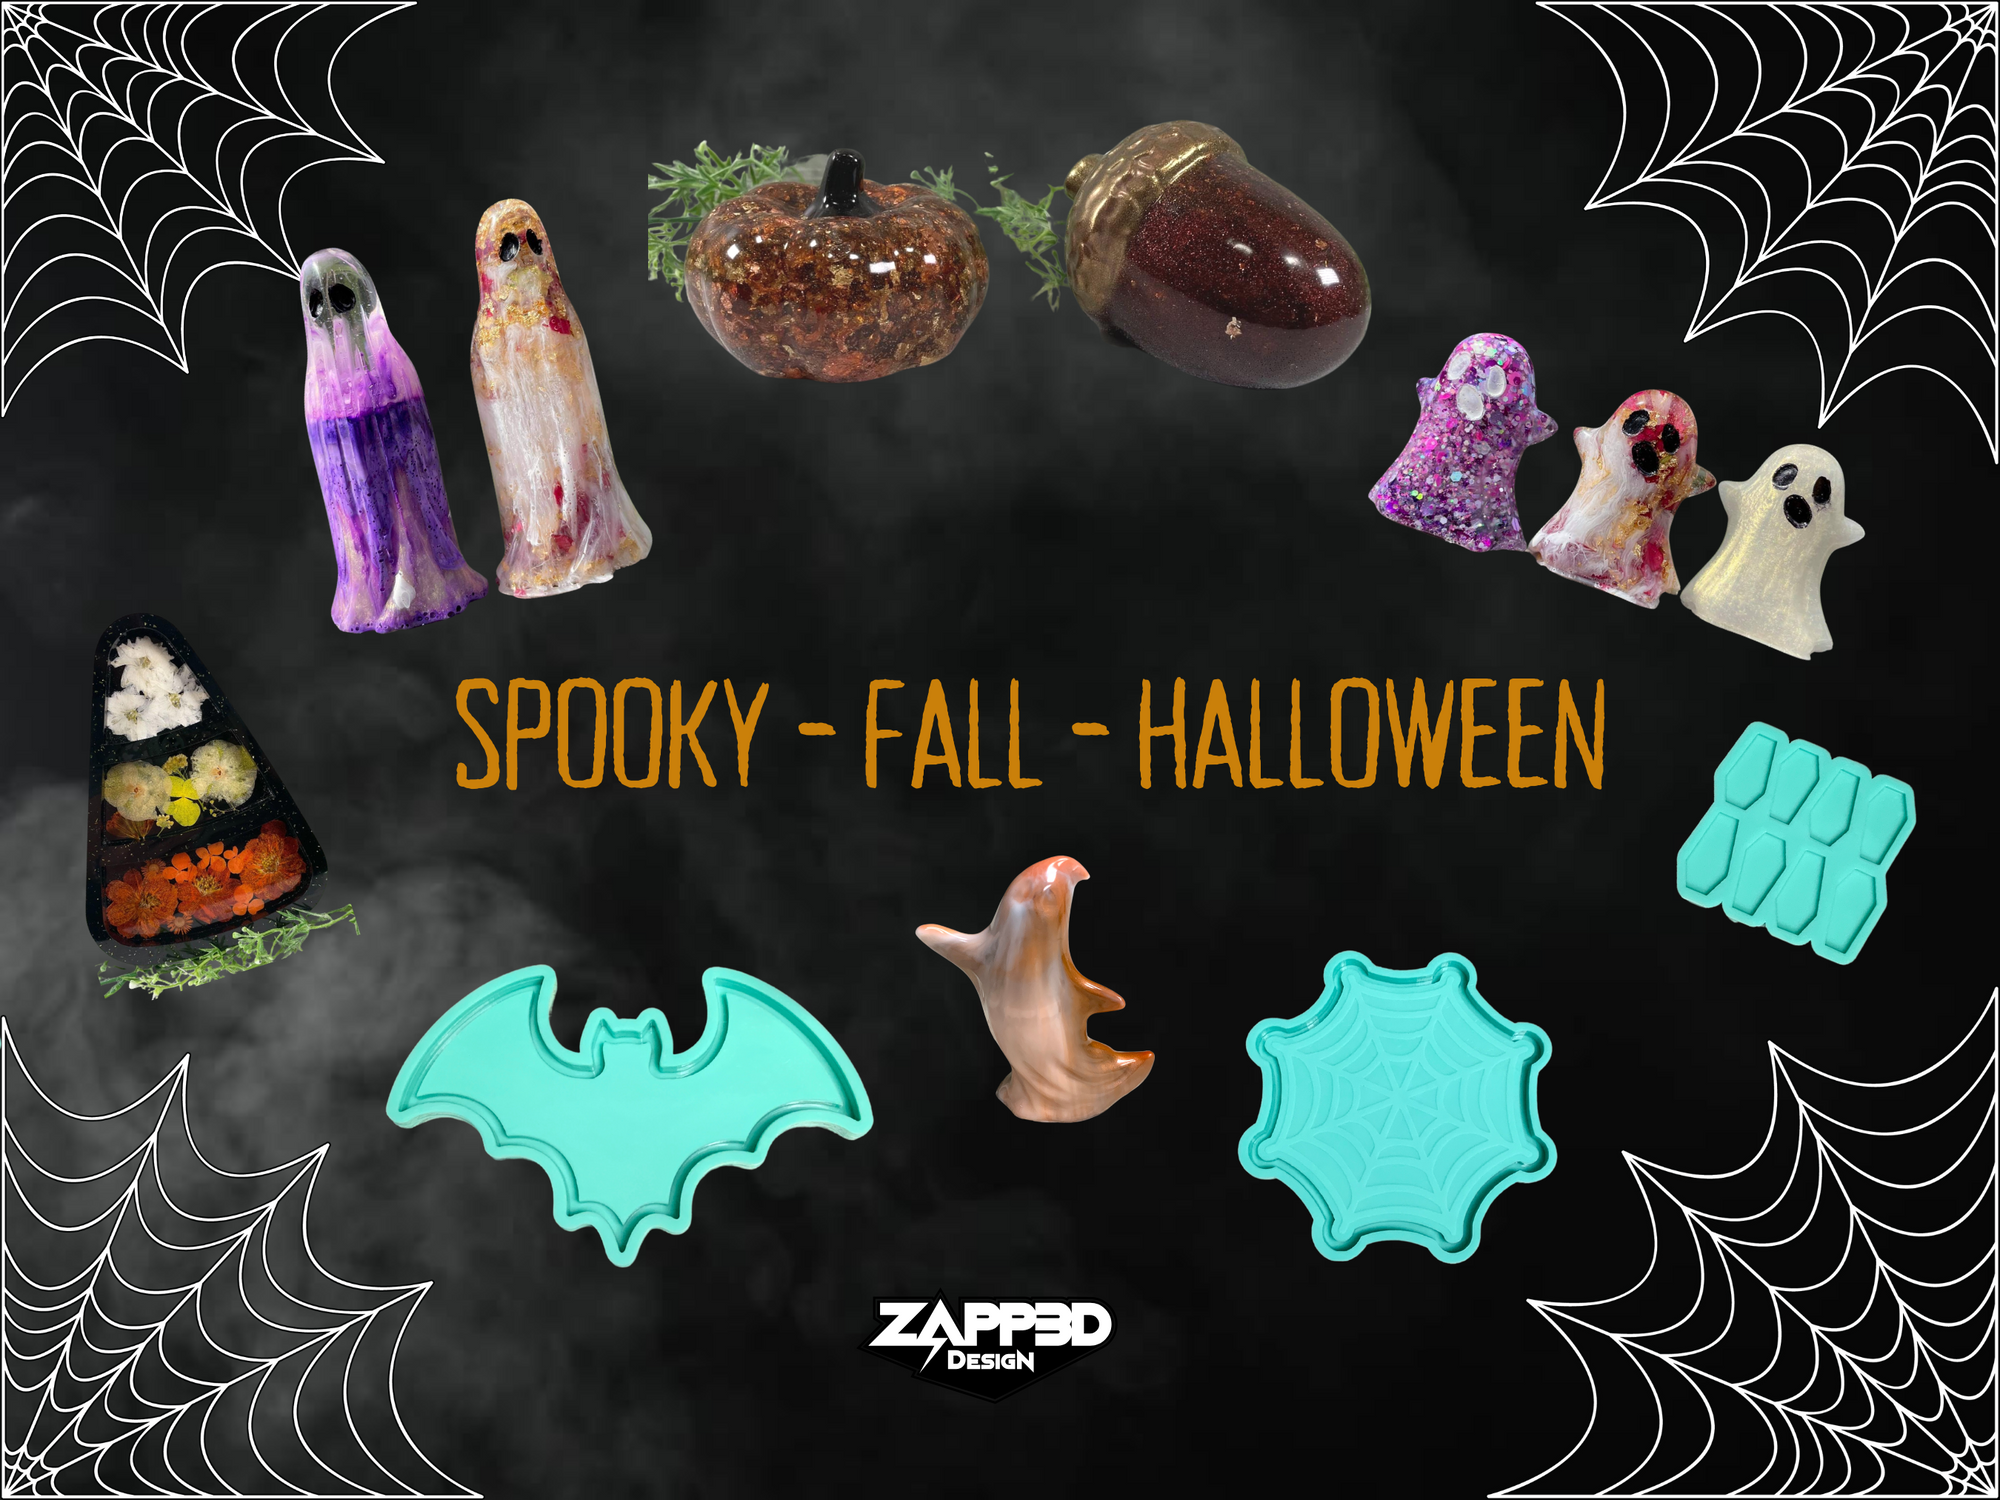 Spooky - Fall - Halloween